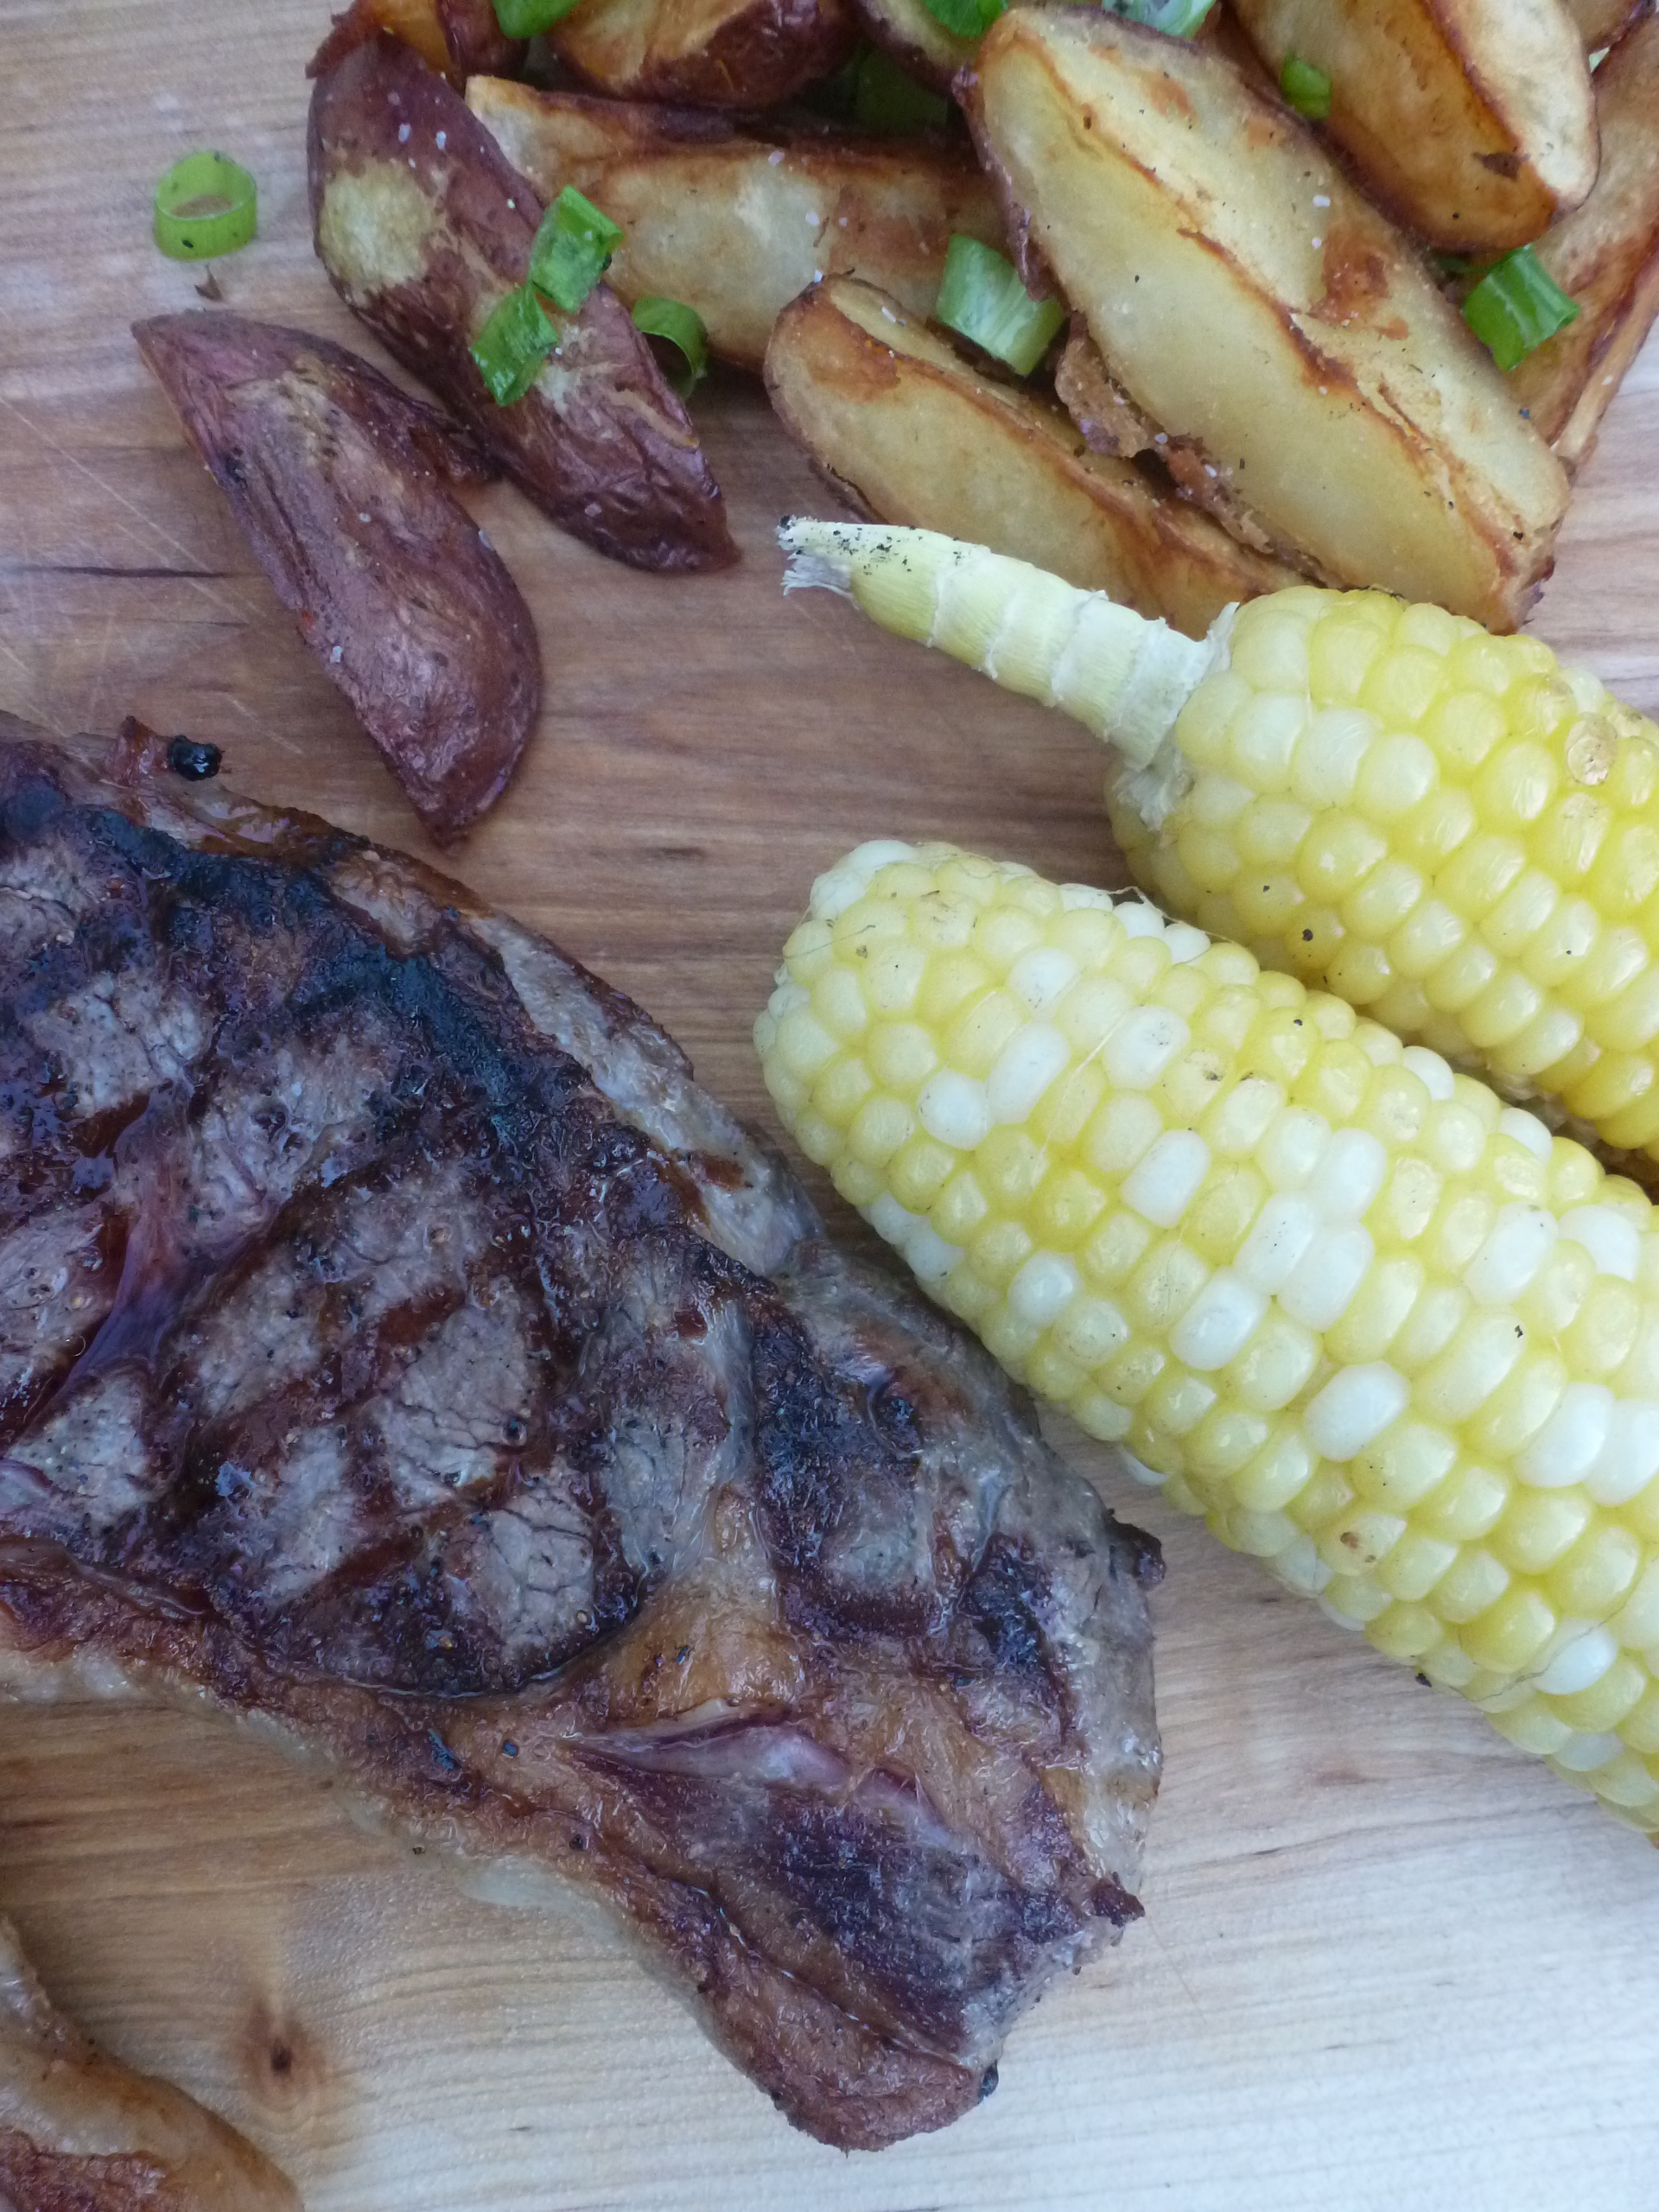 Strip steak, corn on the cob, and steak fries